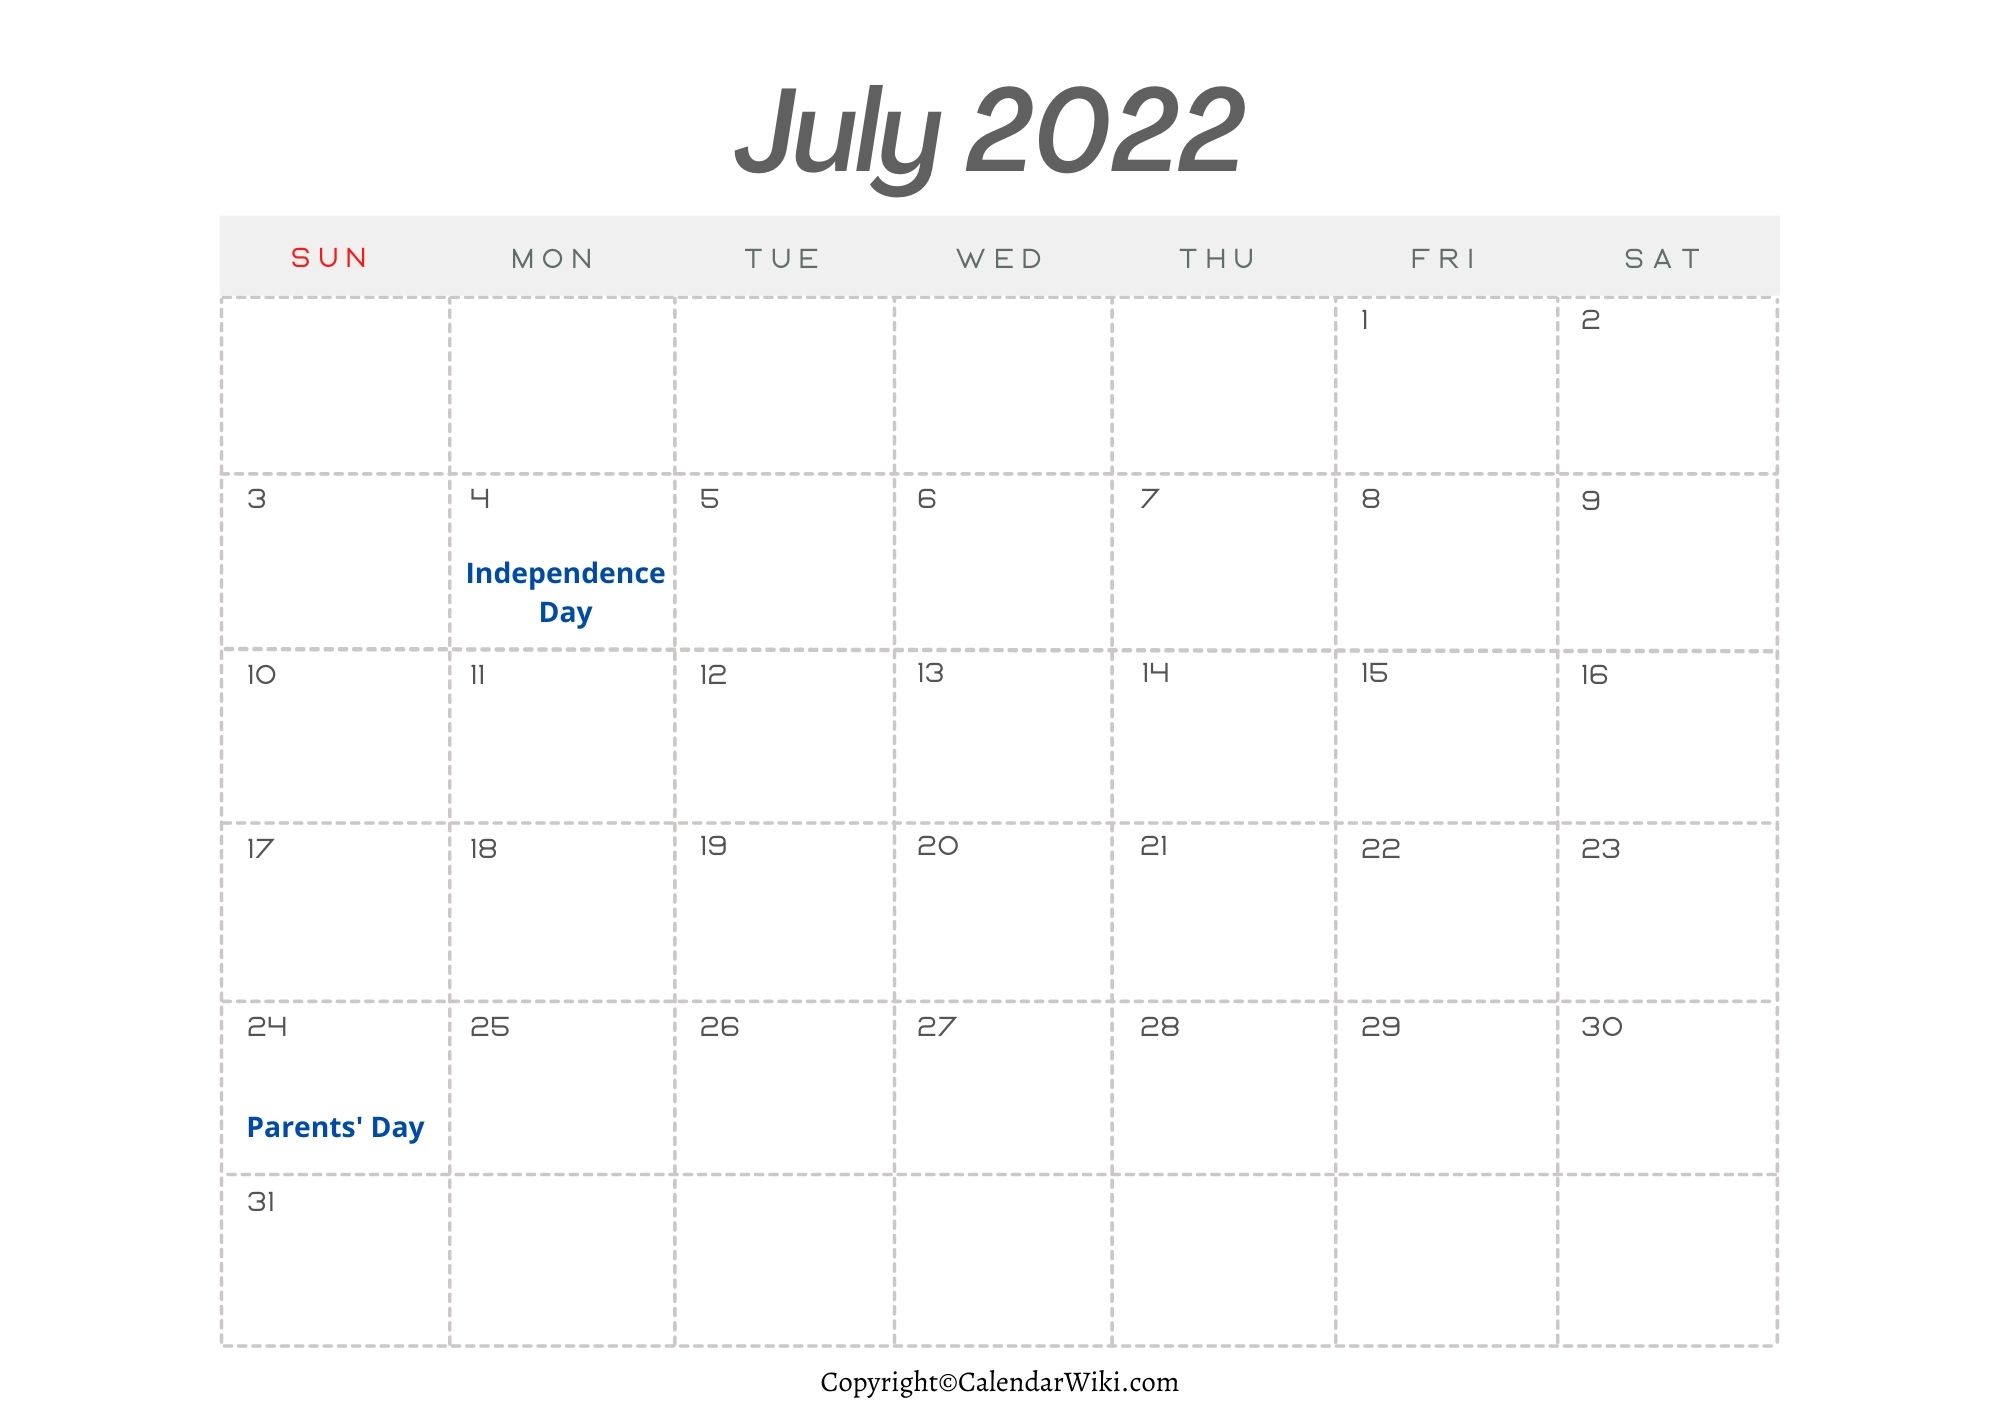 July Holidays 2022